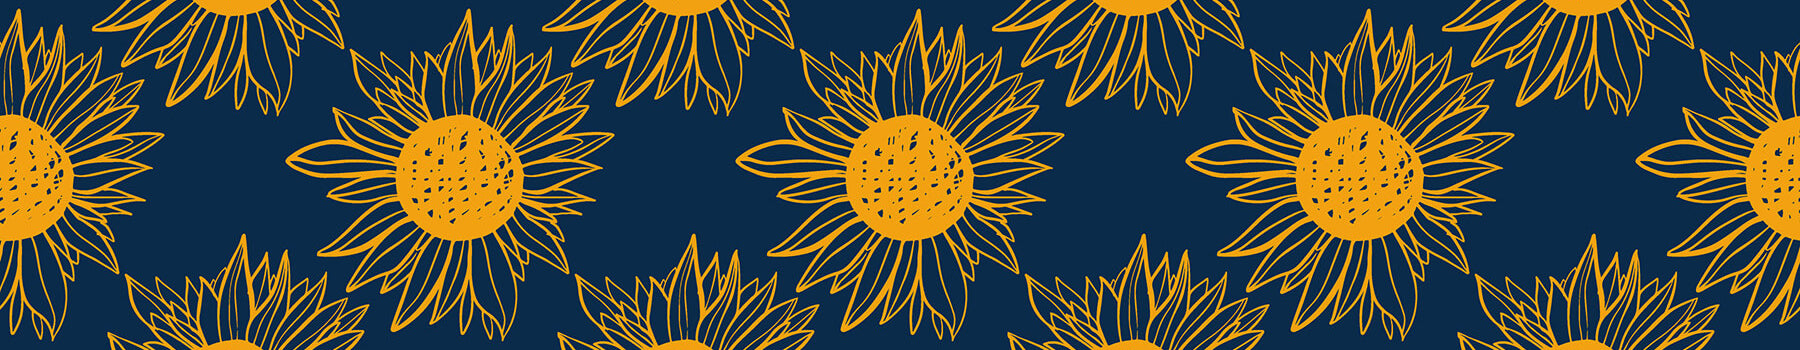 SunflowerStalk.com Sunflower Shirts